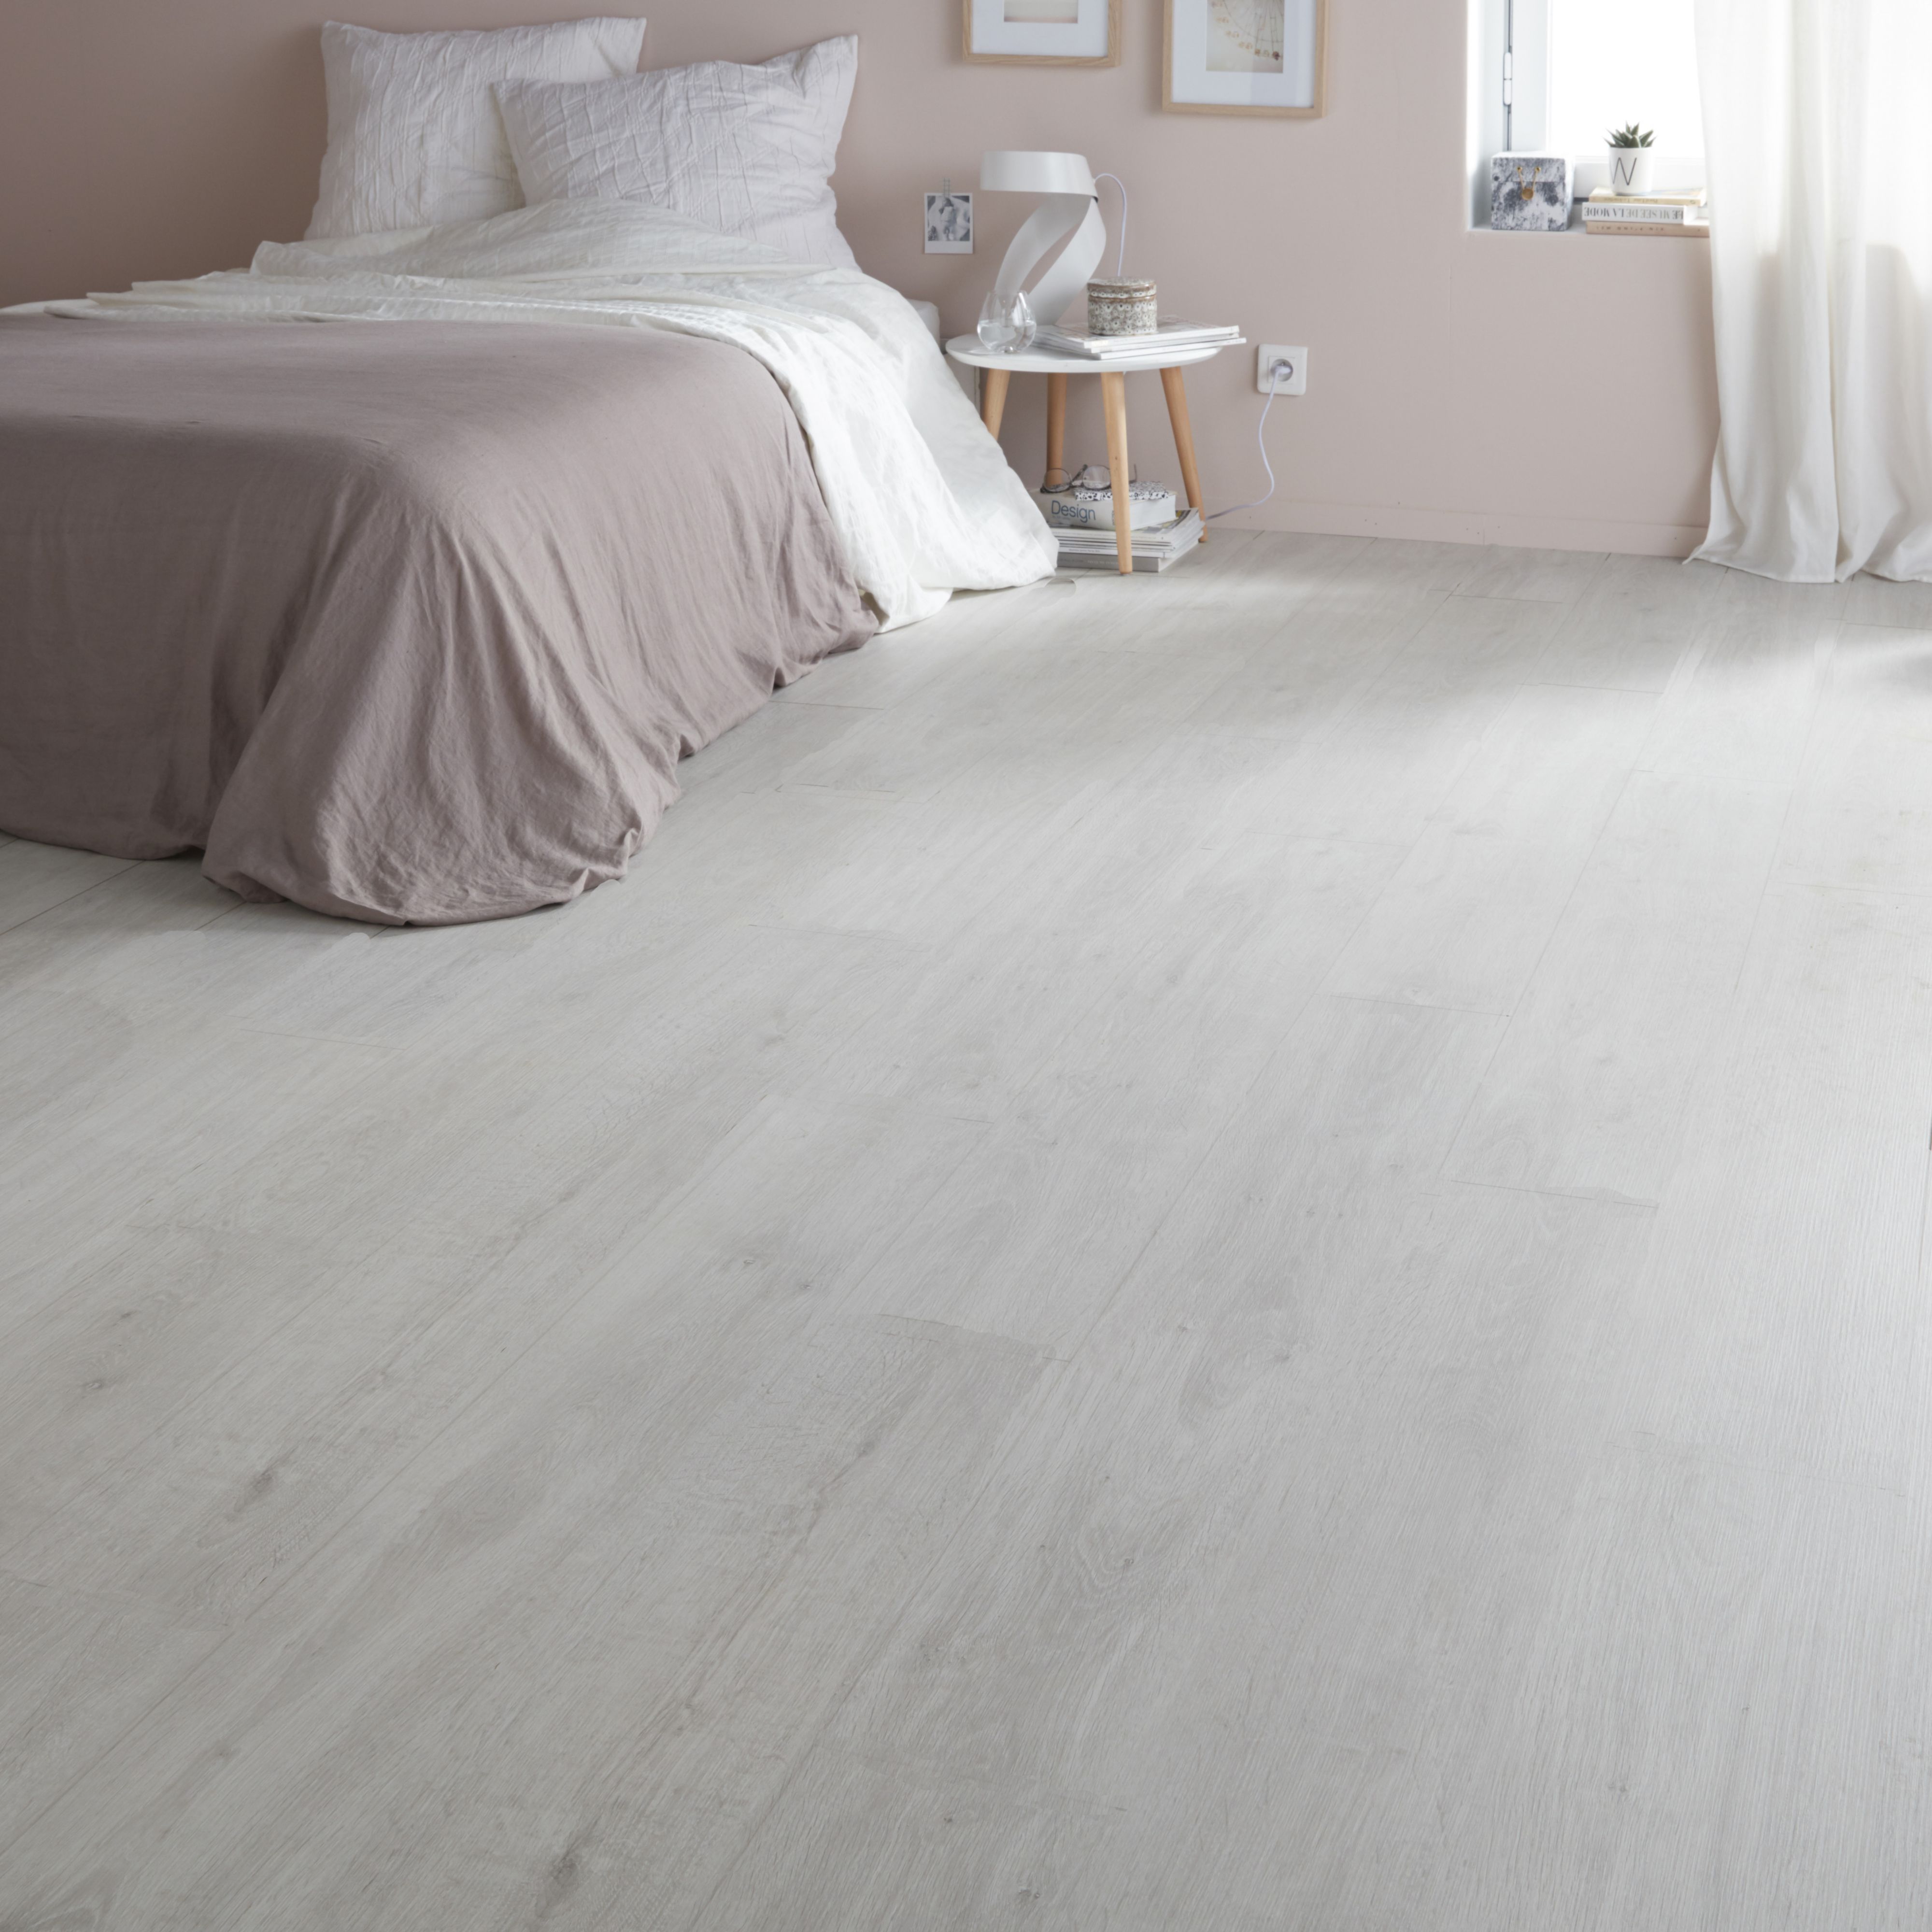 Goodhome Geelong Grey Oak Effect Laminate Flooring 2 47m Pack